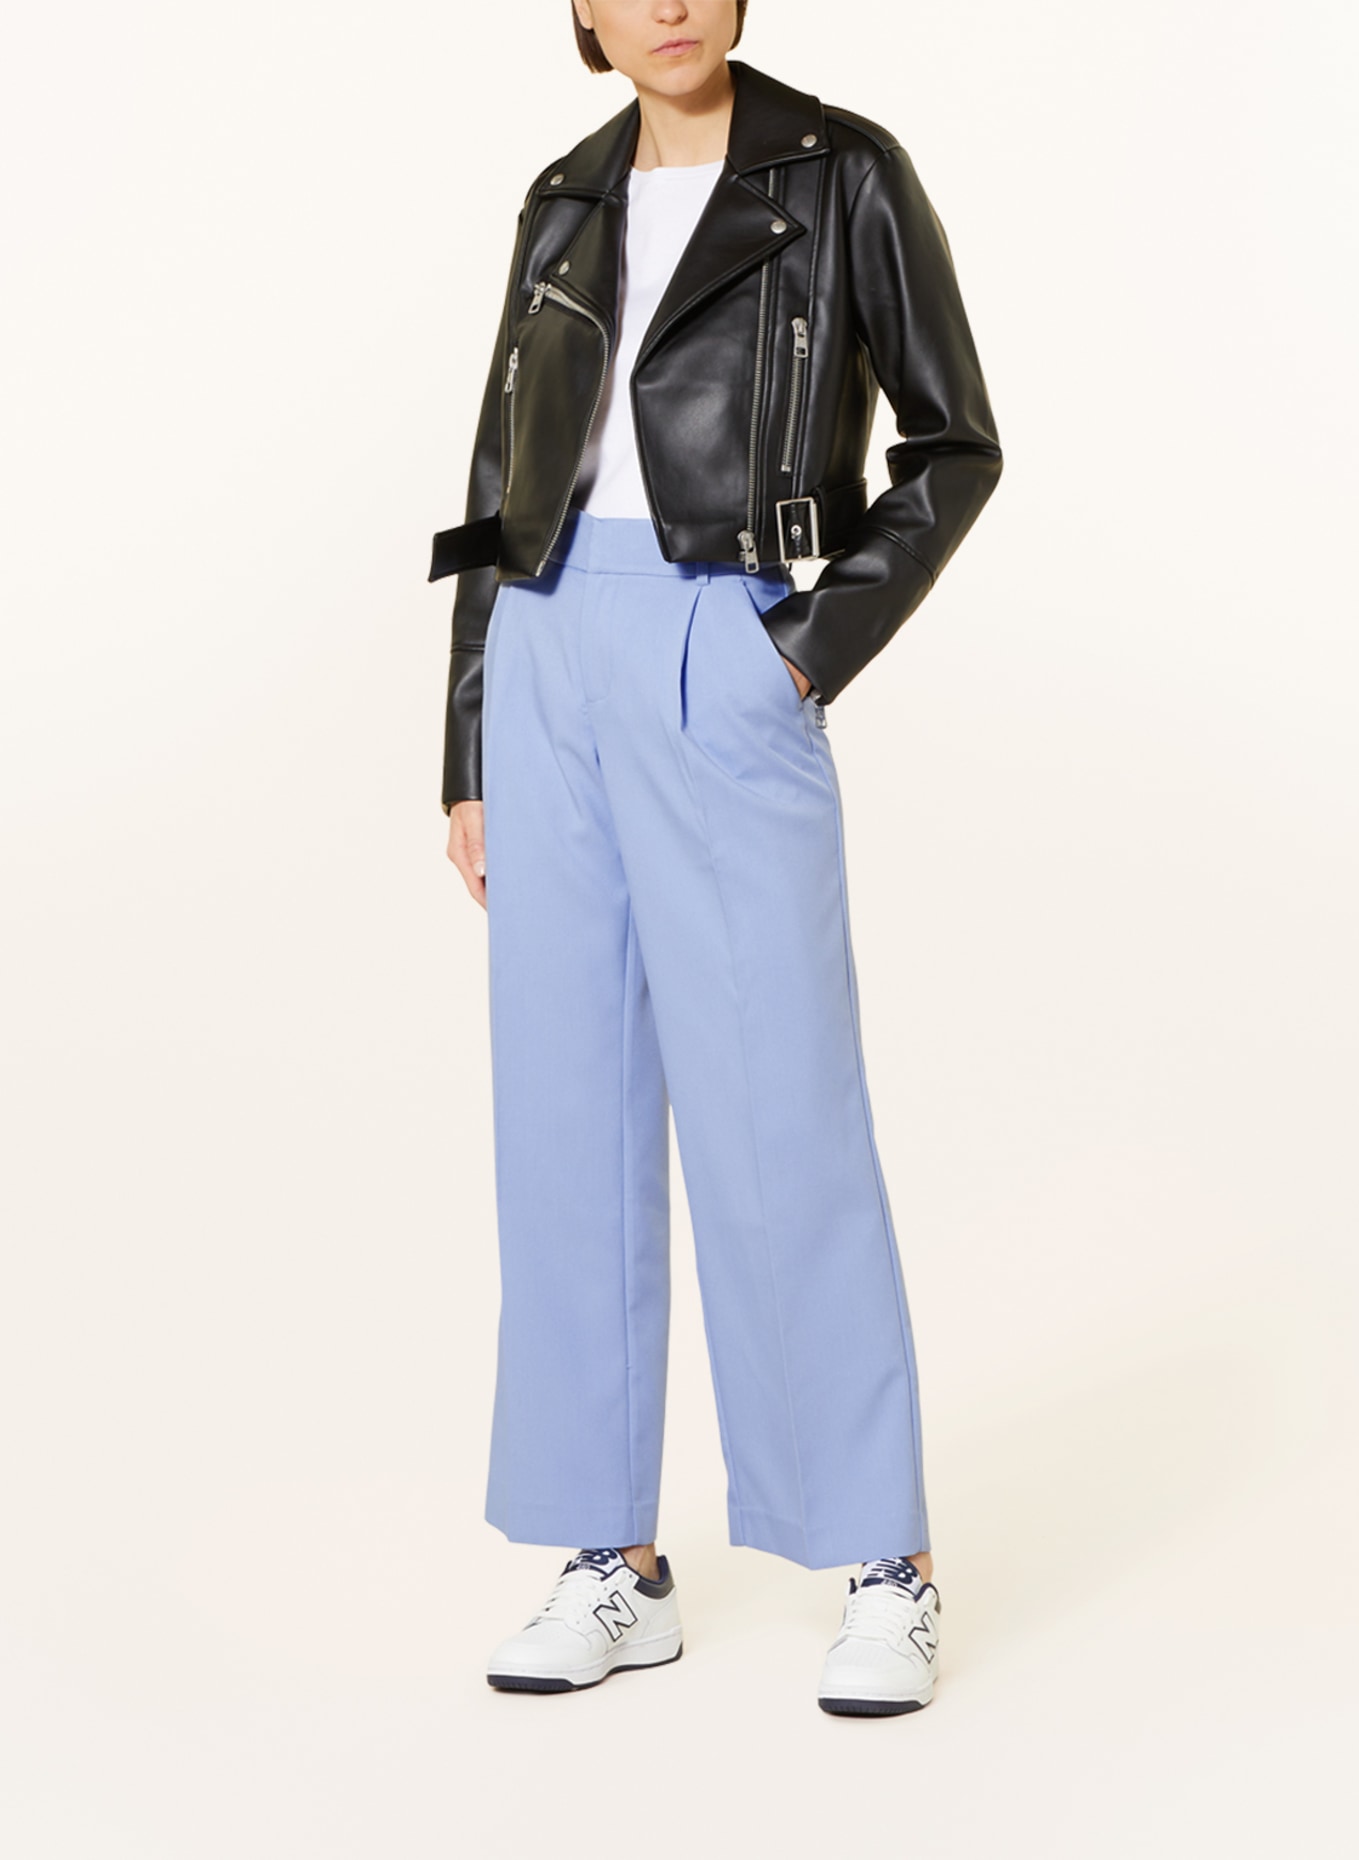 Gina Tricot Velvery Trousers Leggings Size 36 Velvety Zip | eBay